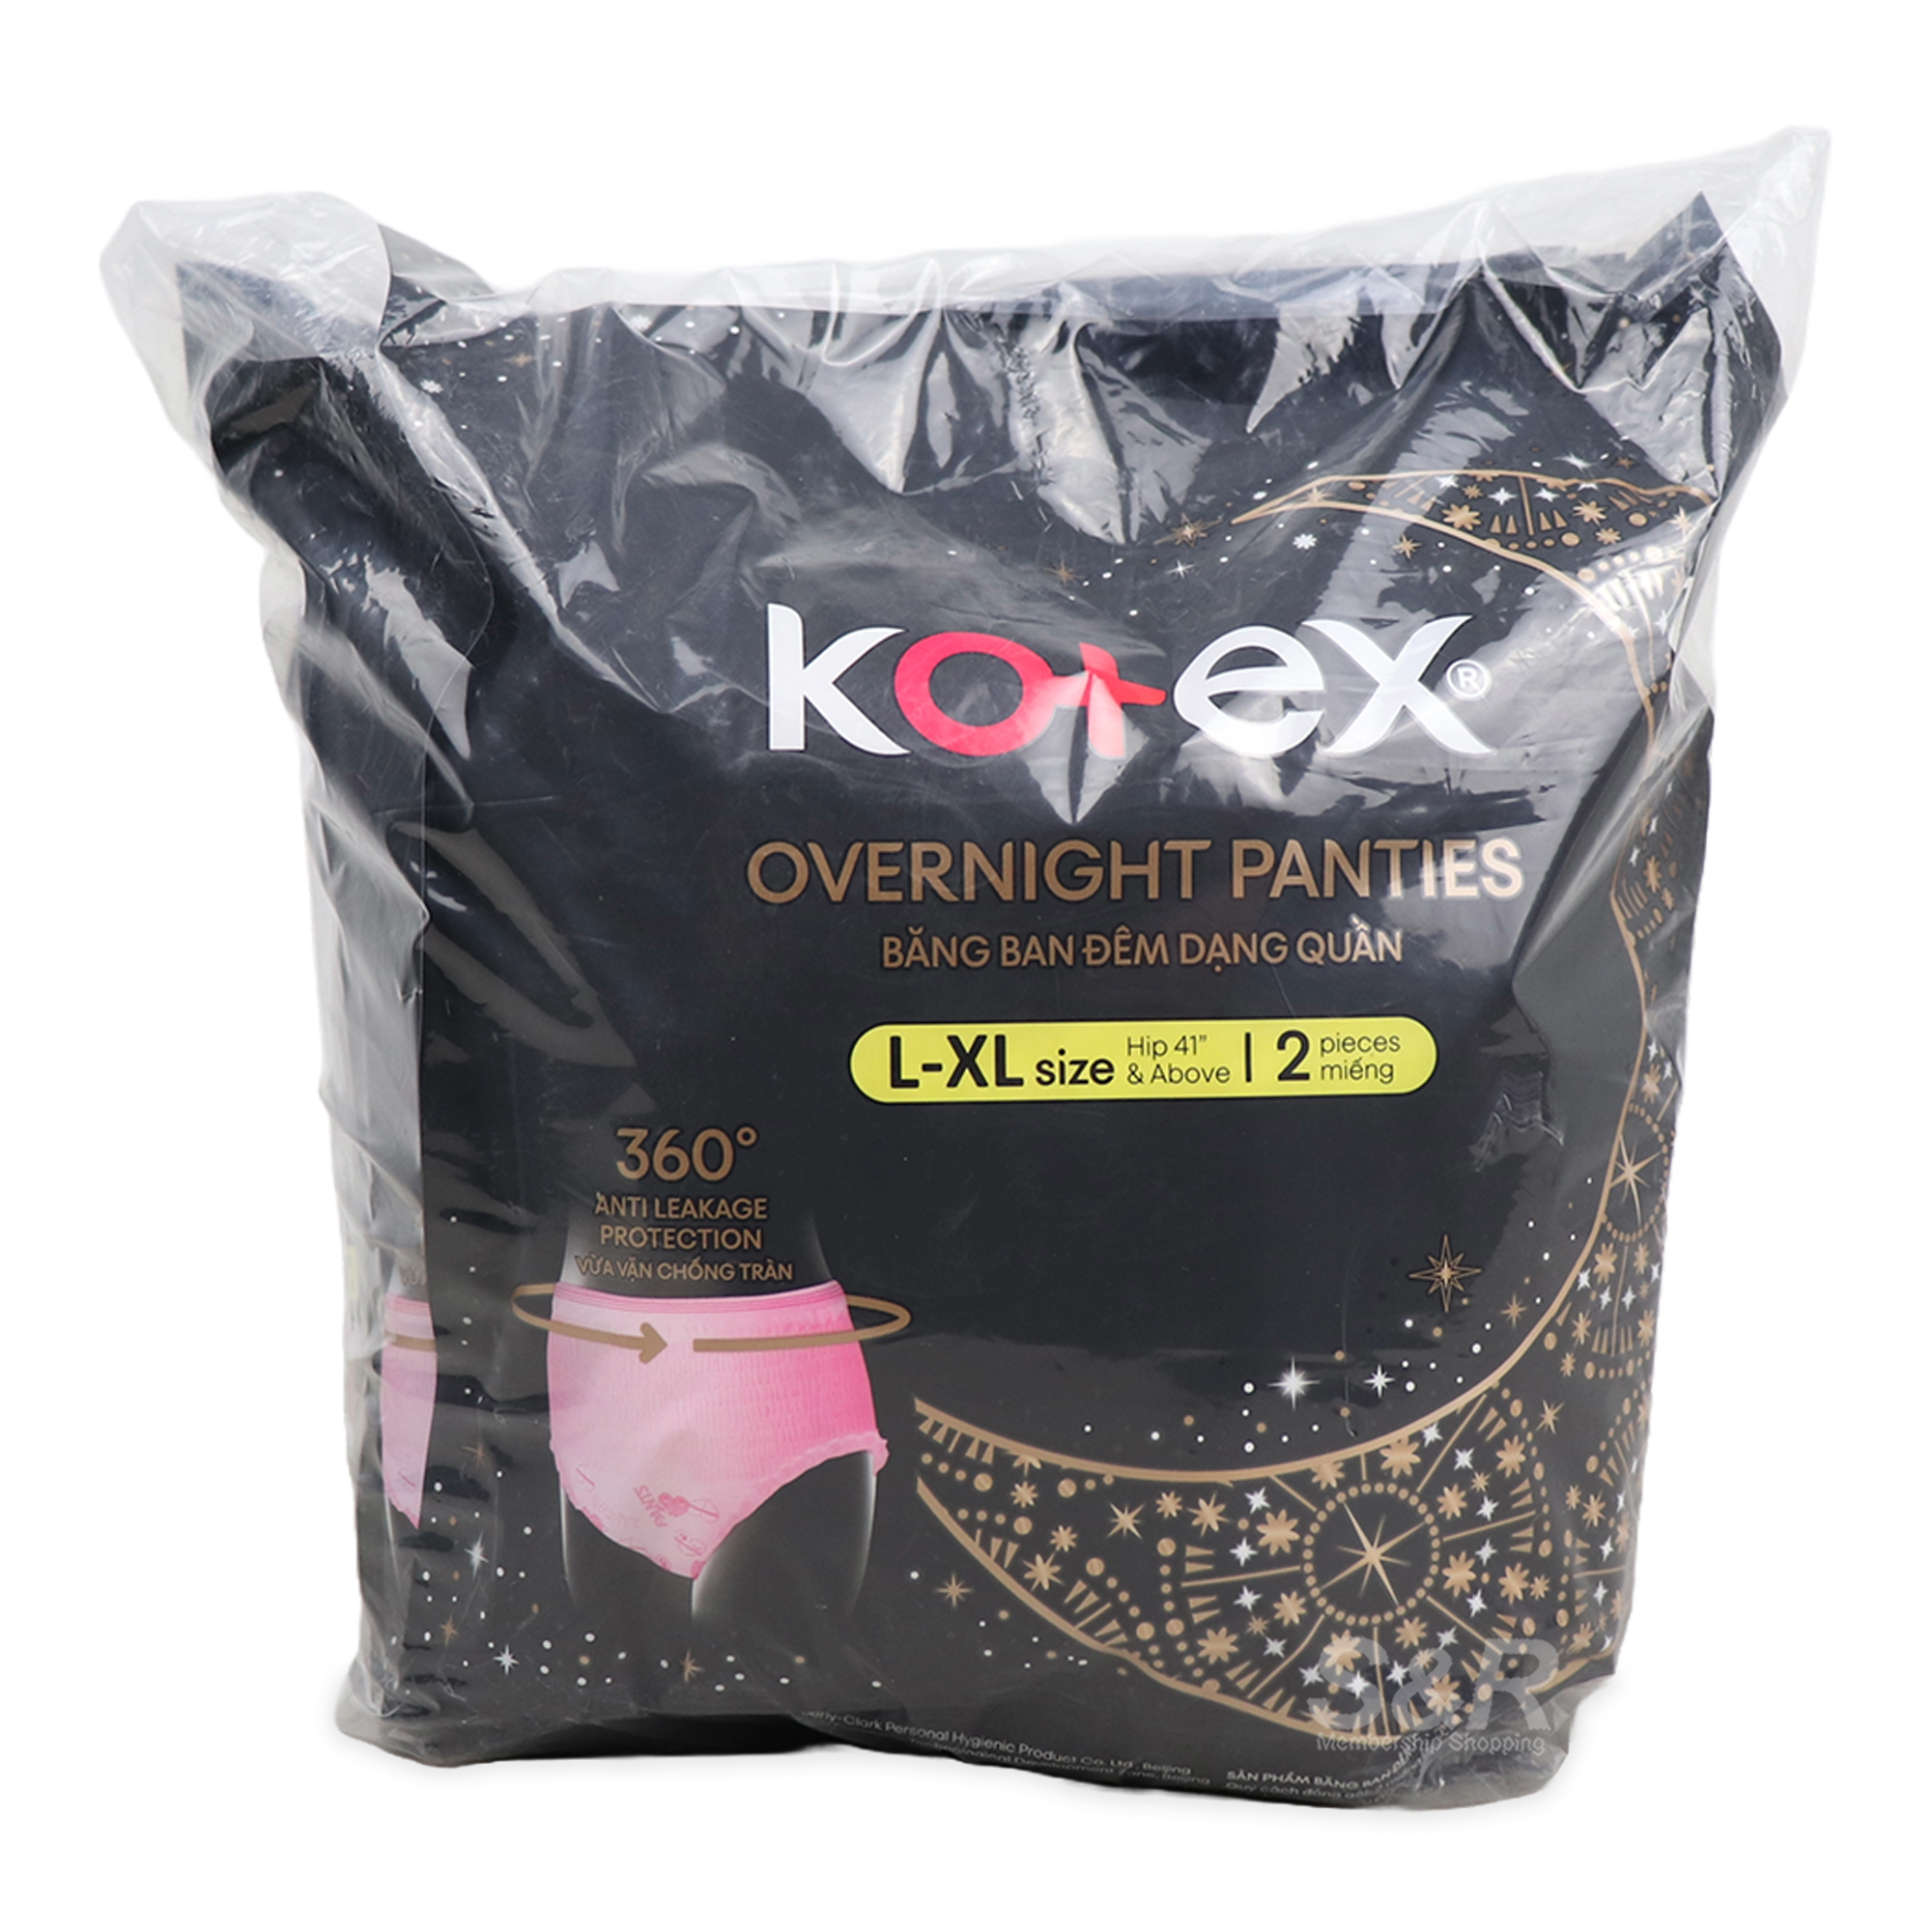 Kotex Overnight Panties L-XL 2packs